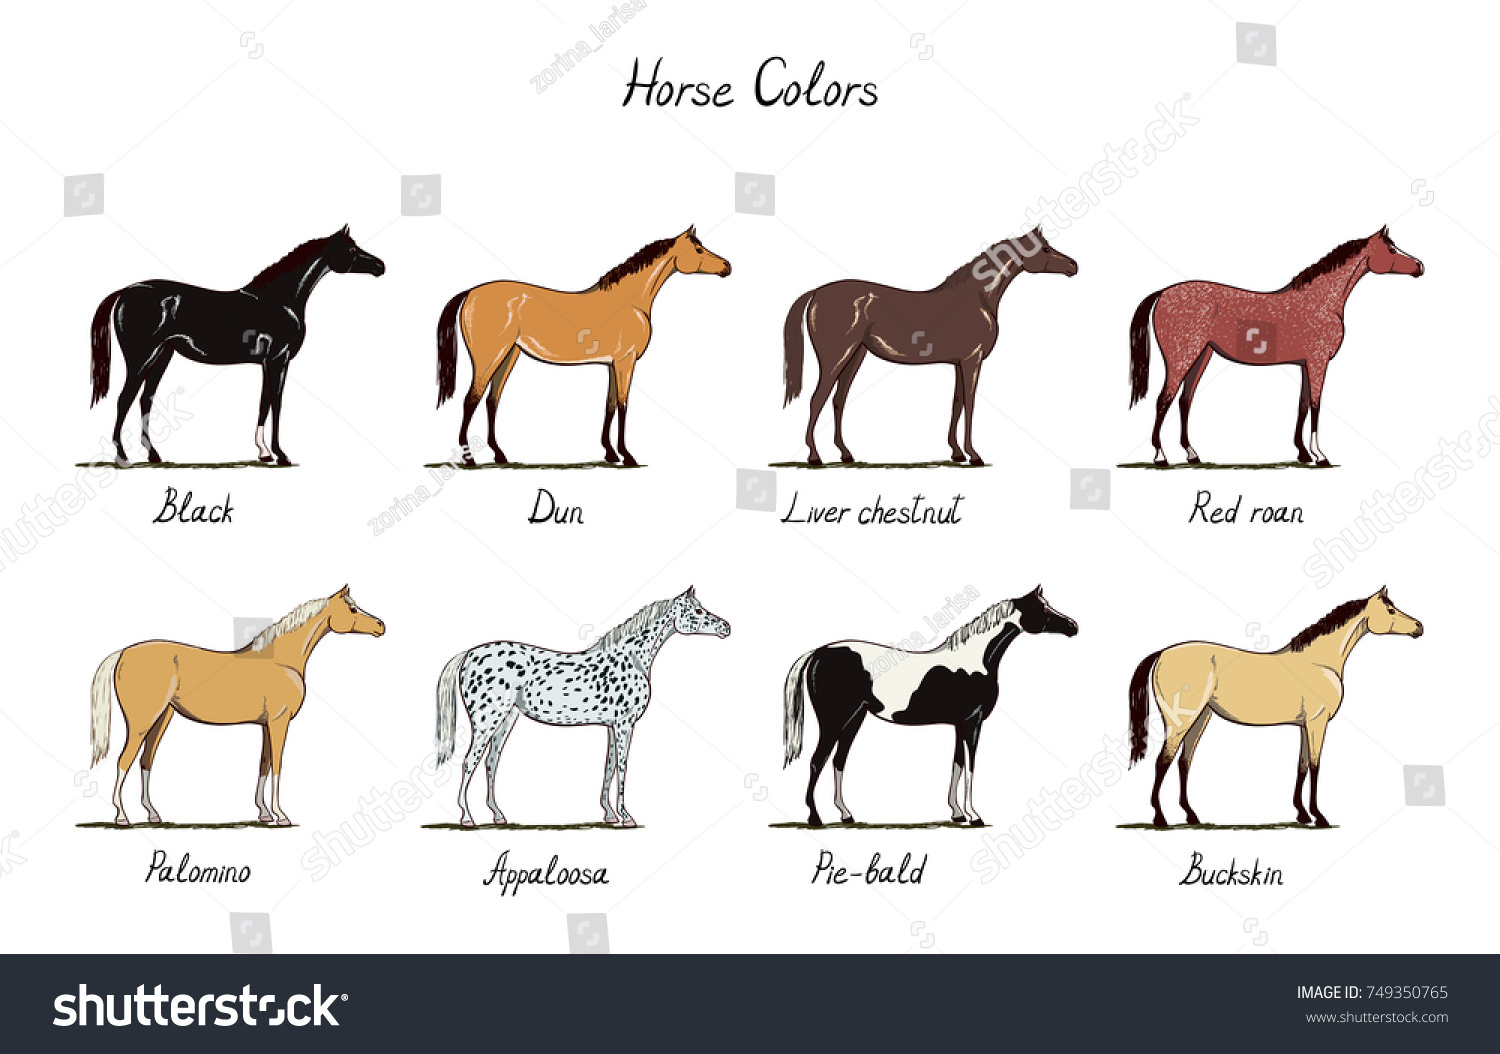 Horse Color Chart Set Equine Coat: стоковая векторная графика (без лицензио...